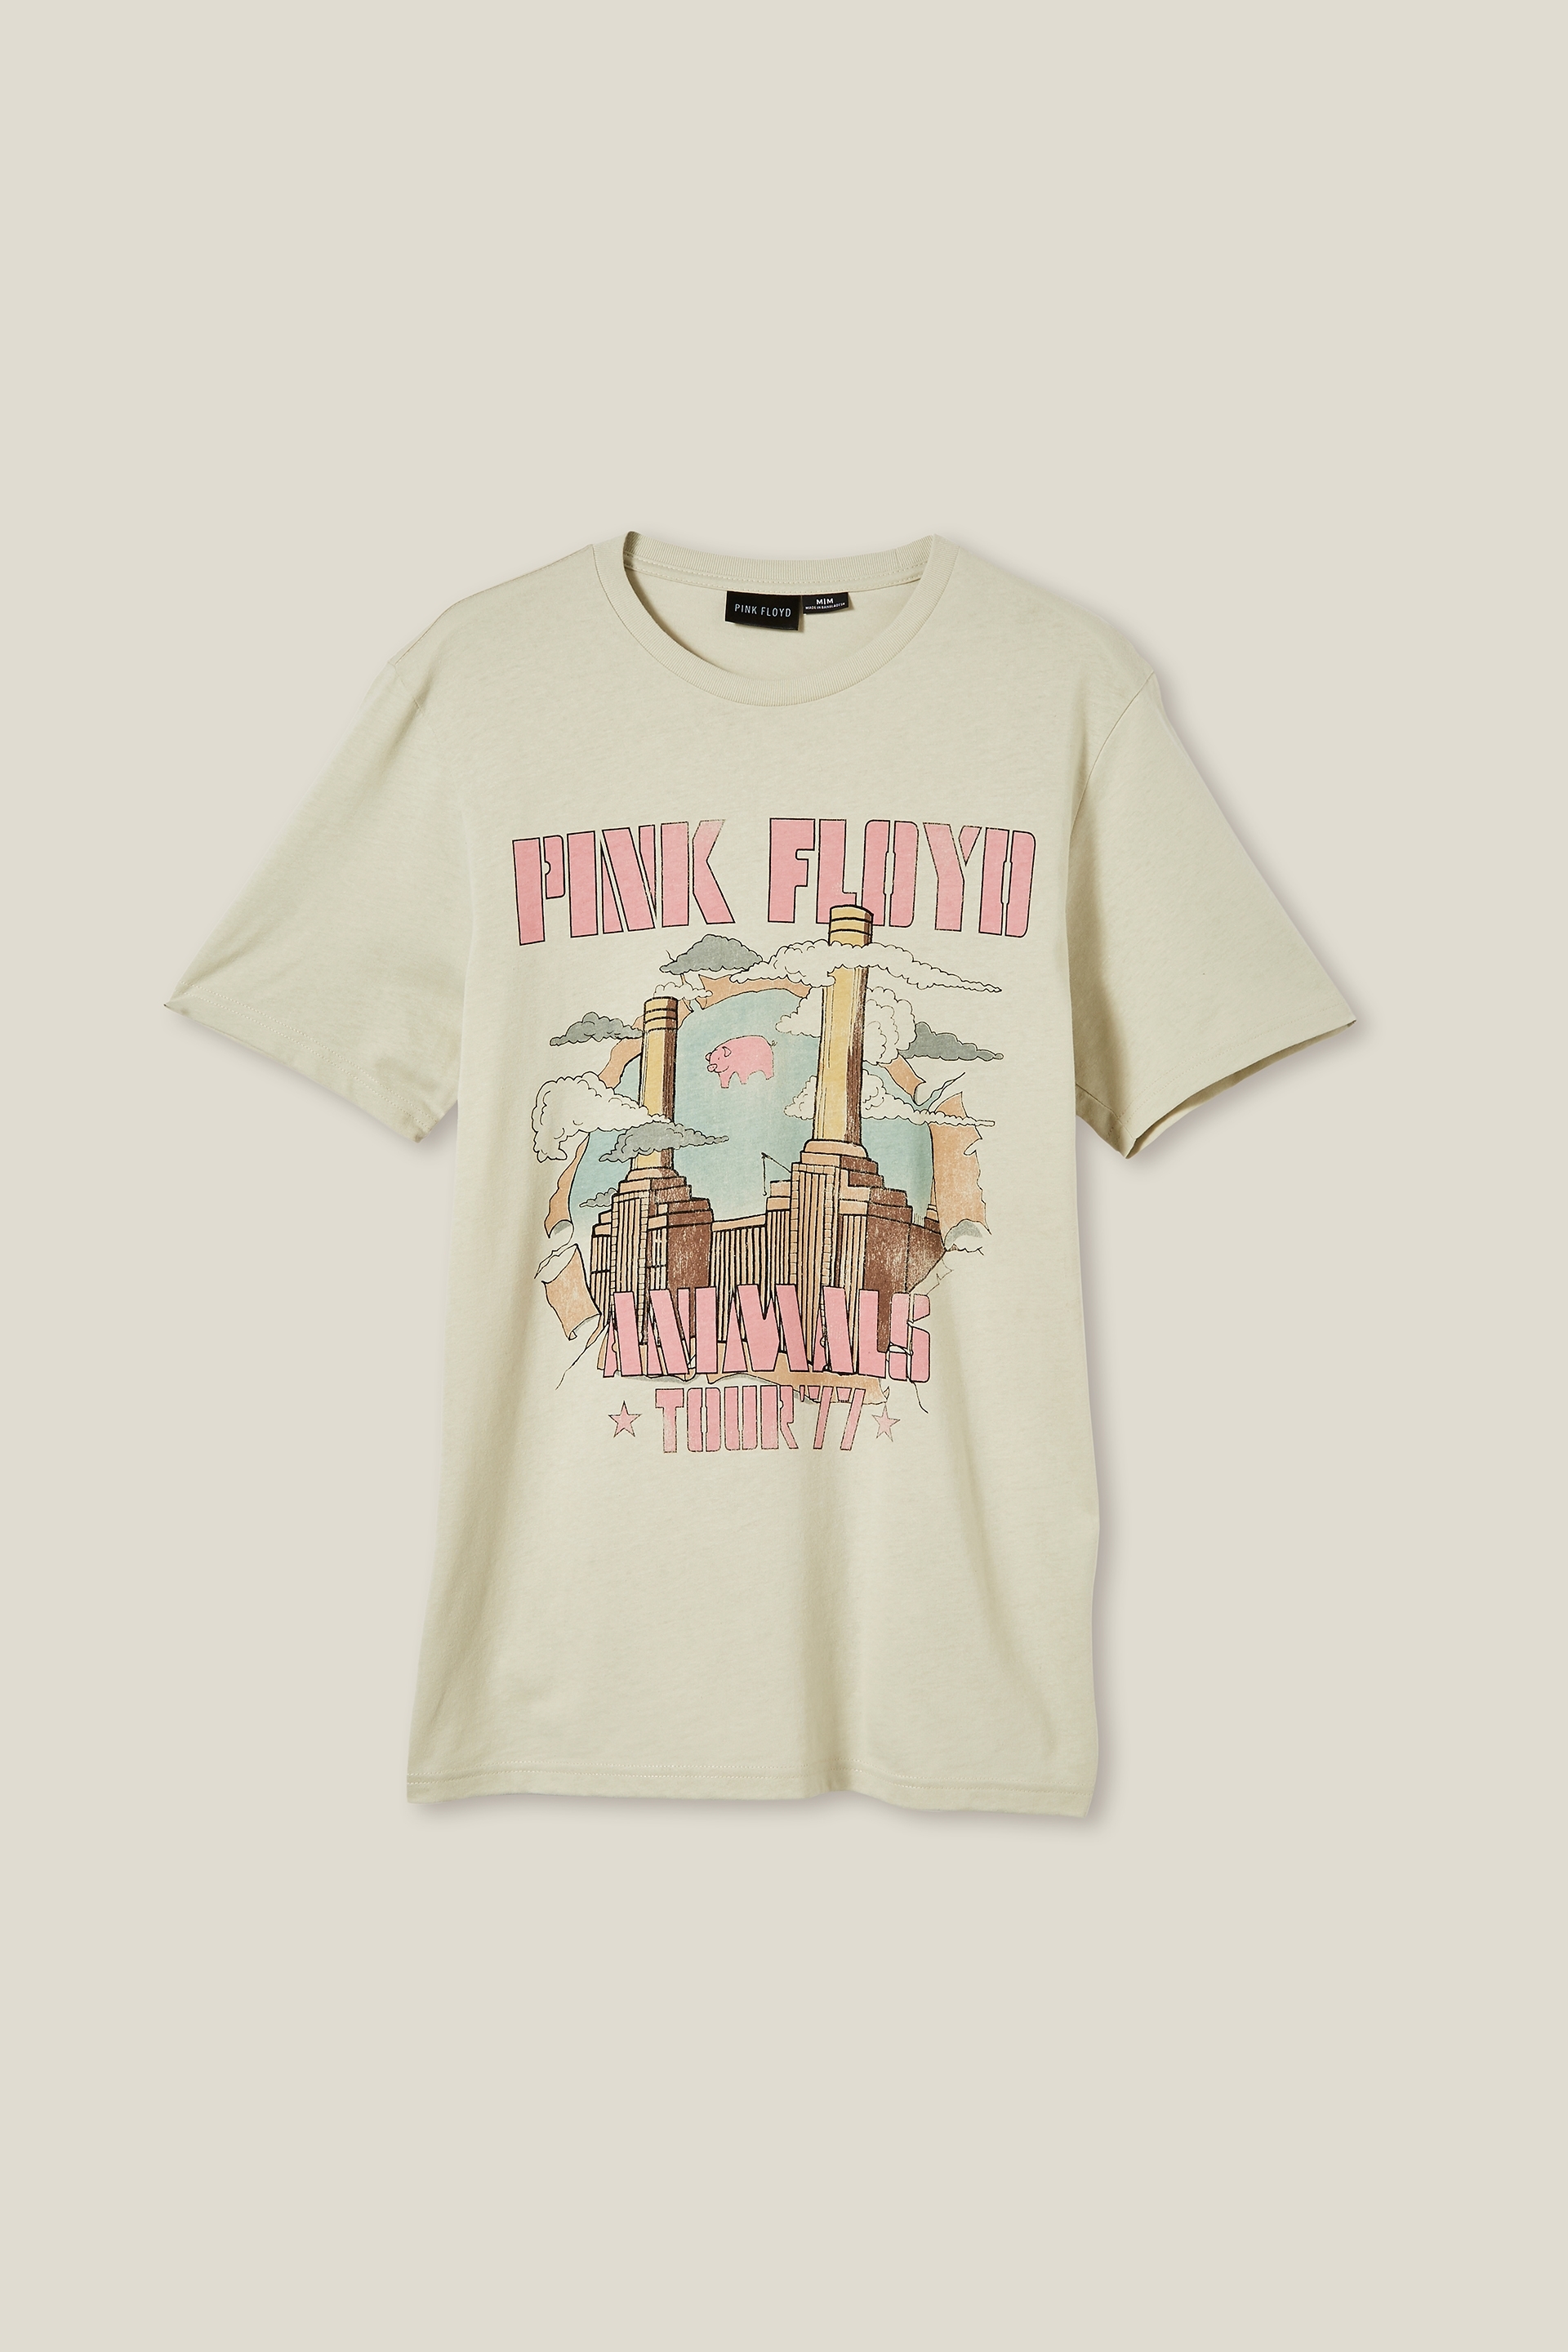 Cotton On Men - Tbar Collab Music T-Shirt - Lcn per ivory/pink floyd - animals